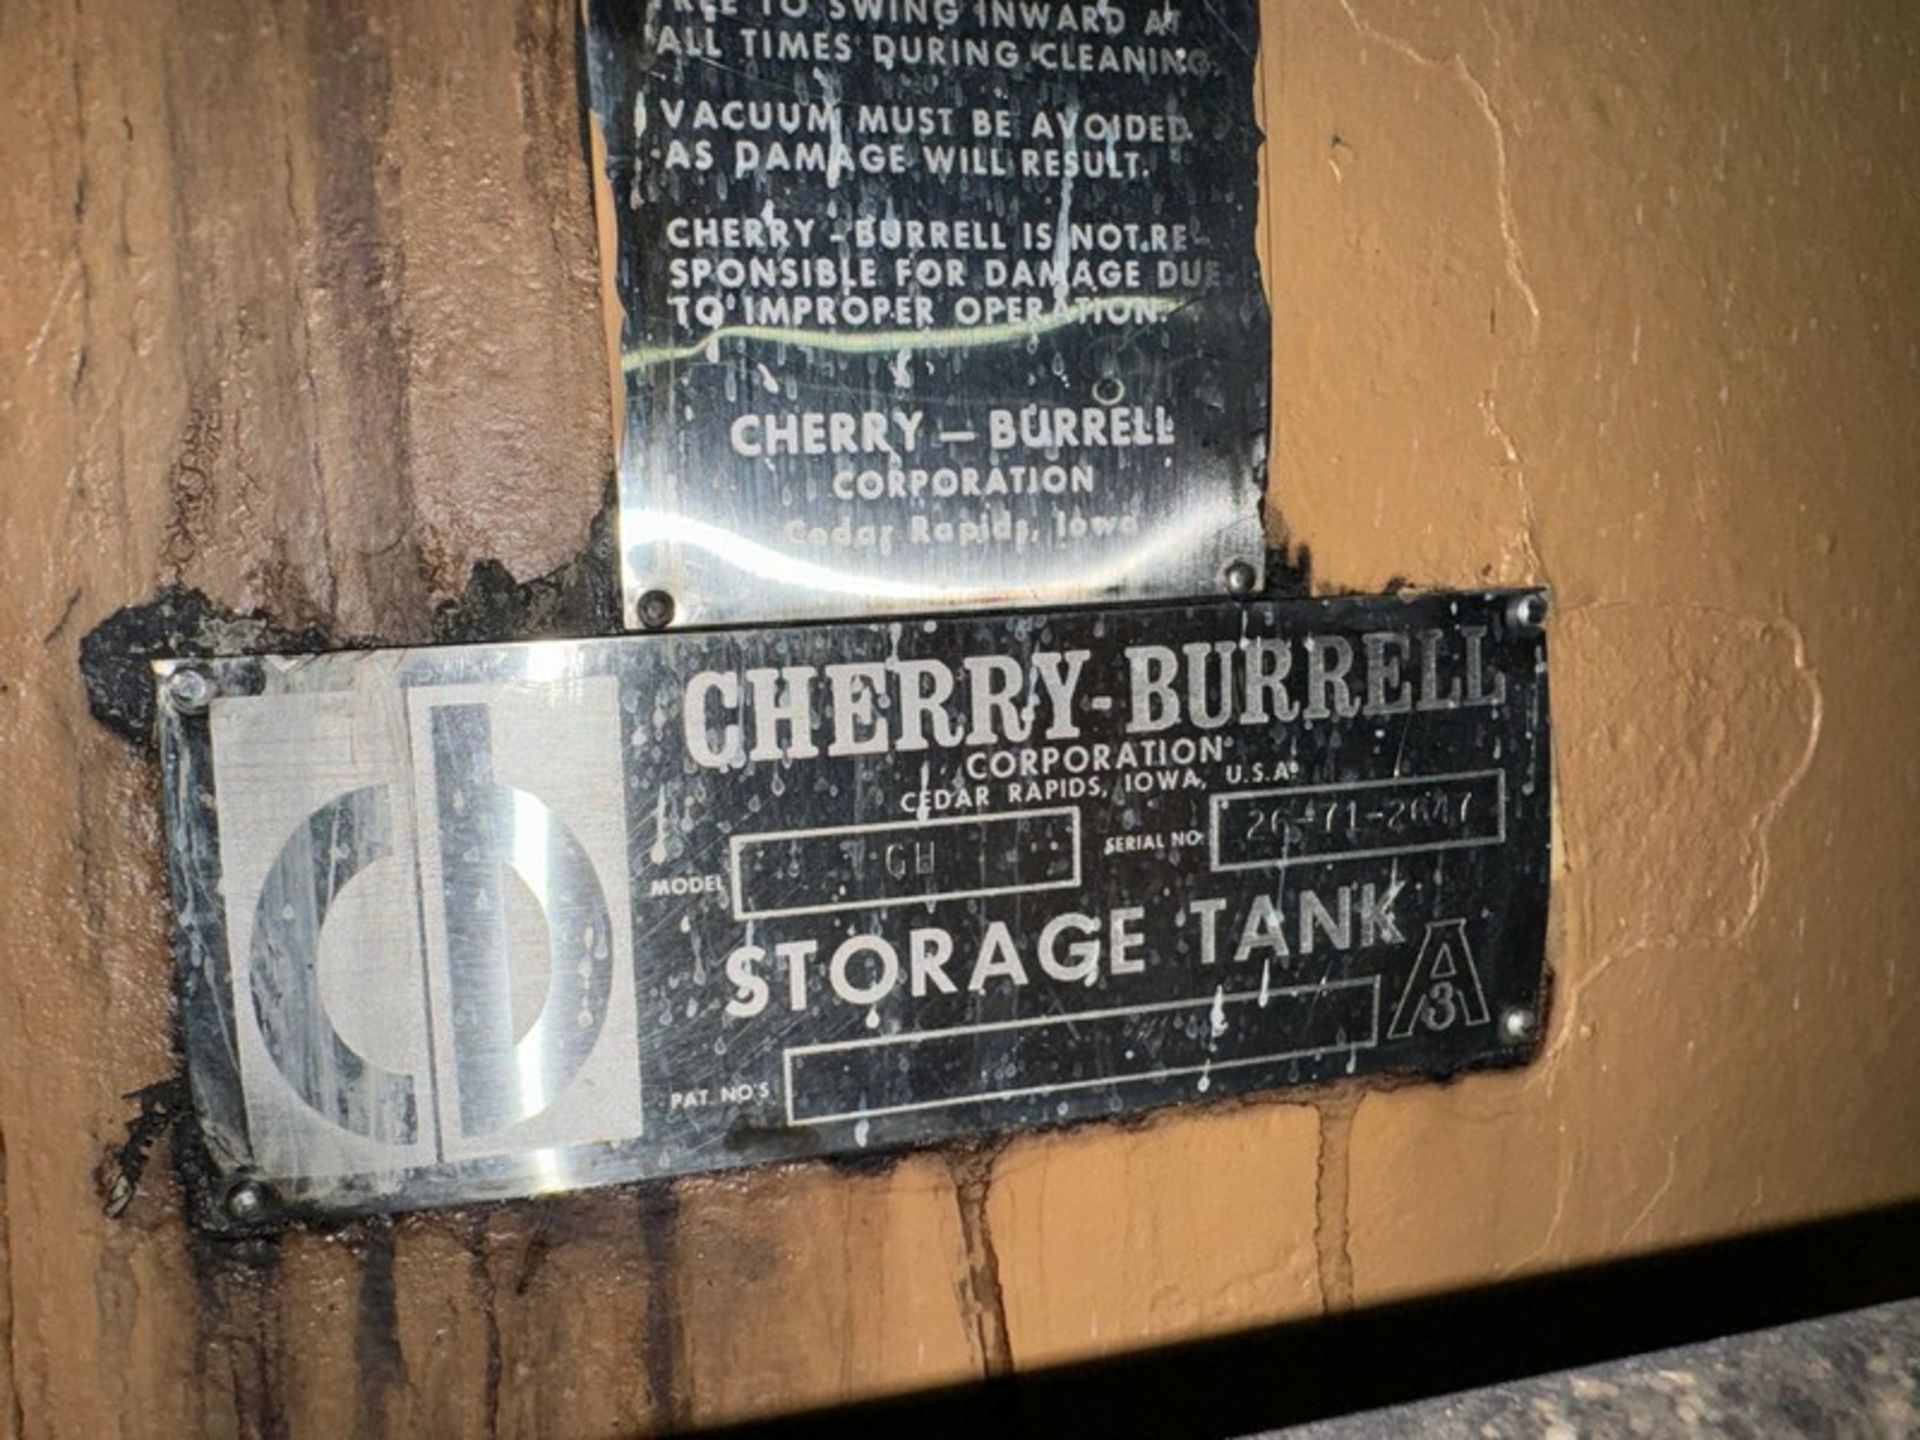 Cherry-Burrell Aprox. 2,500 Gal. S/S Single Wall Tank, M/N GH, S/N 26-70-2647, with Front Man - Bild 3 aus 4